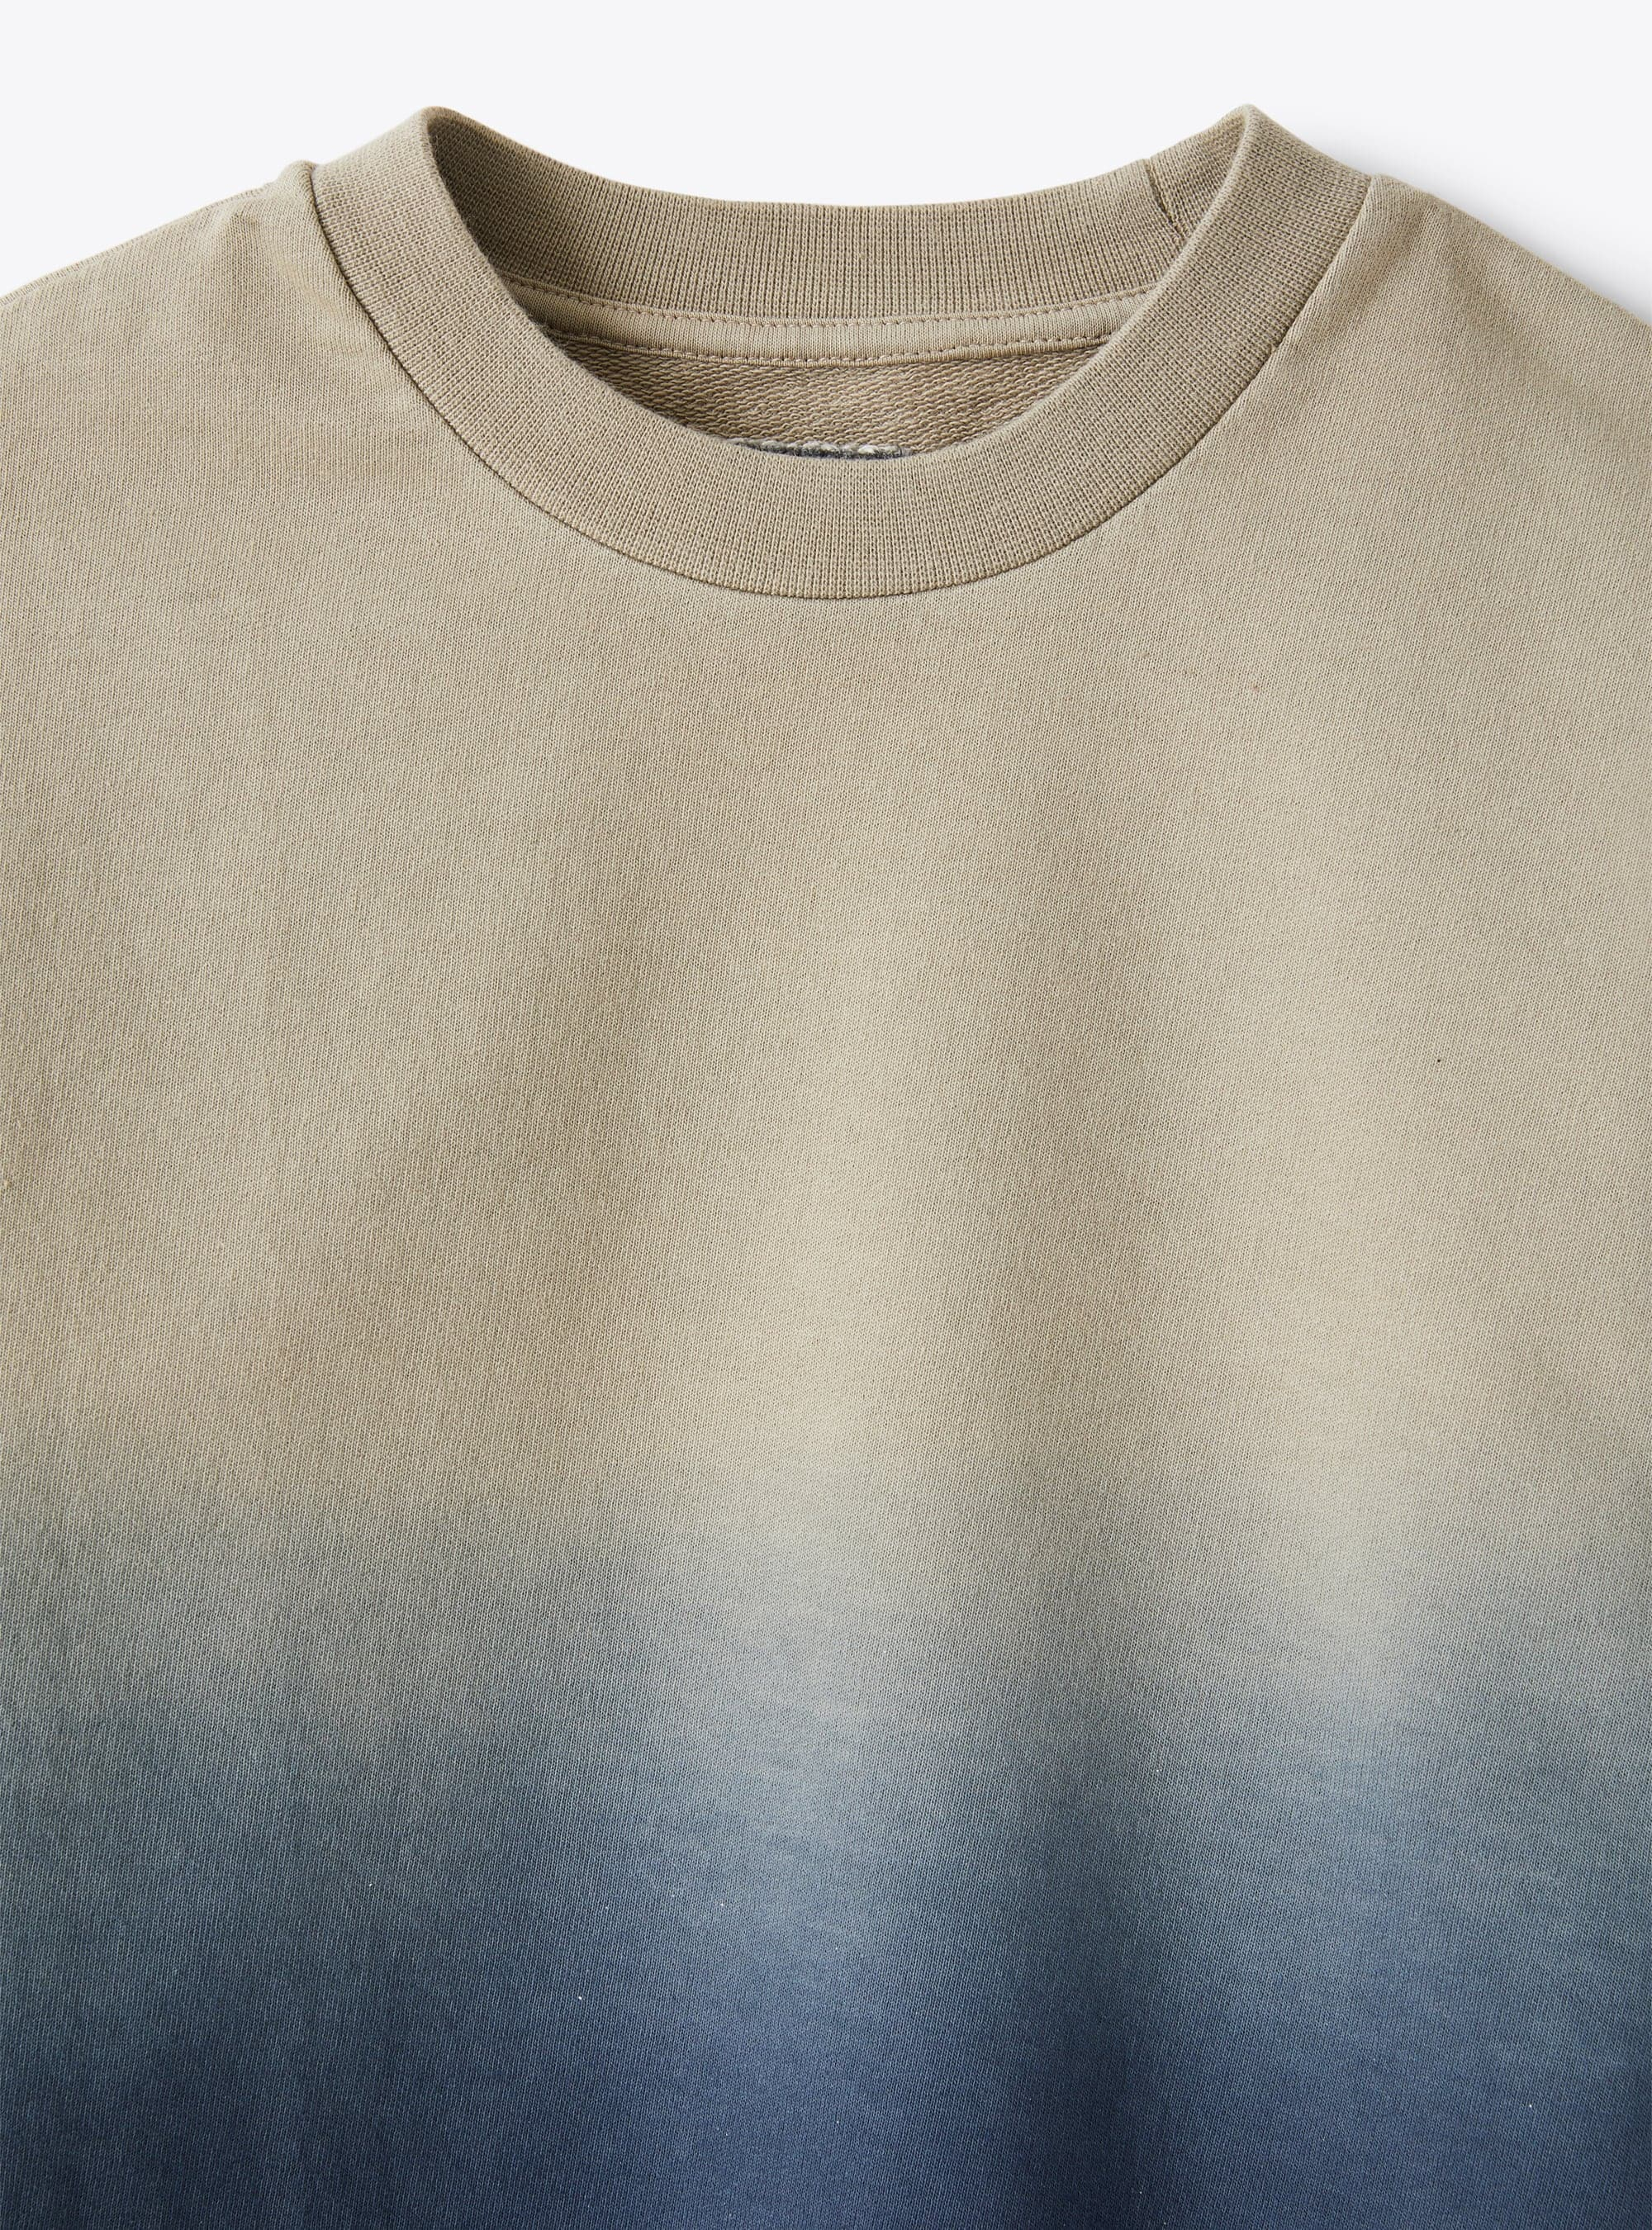 Gradient-effect sweatshirt in beige and blue - Beige | Il Gufo